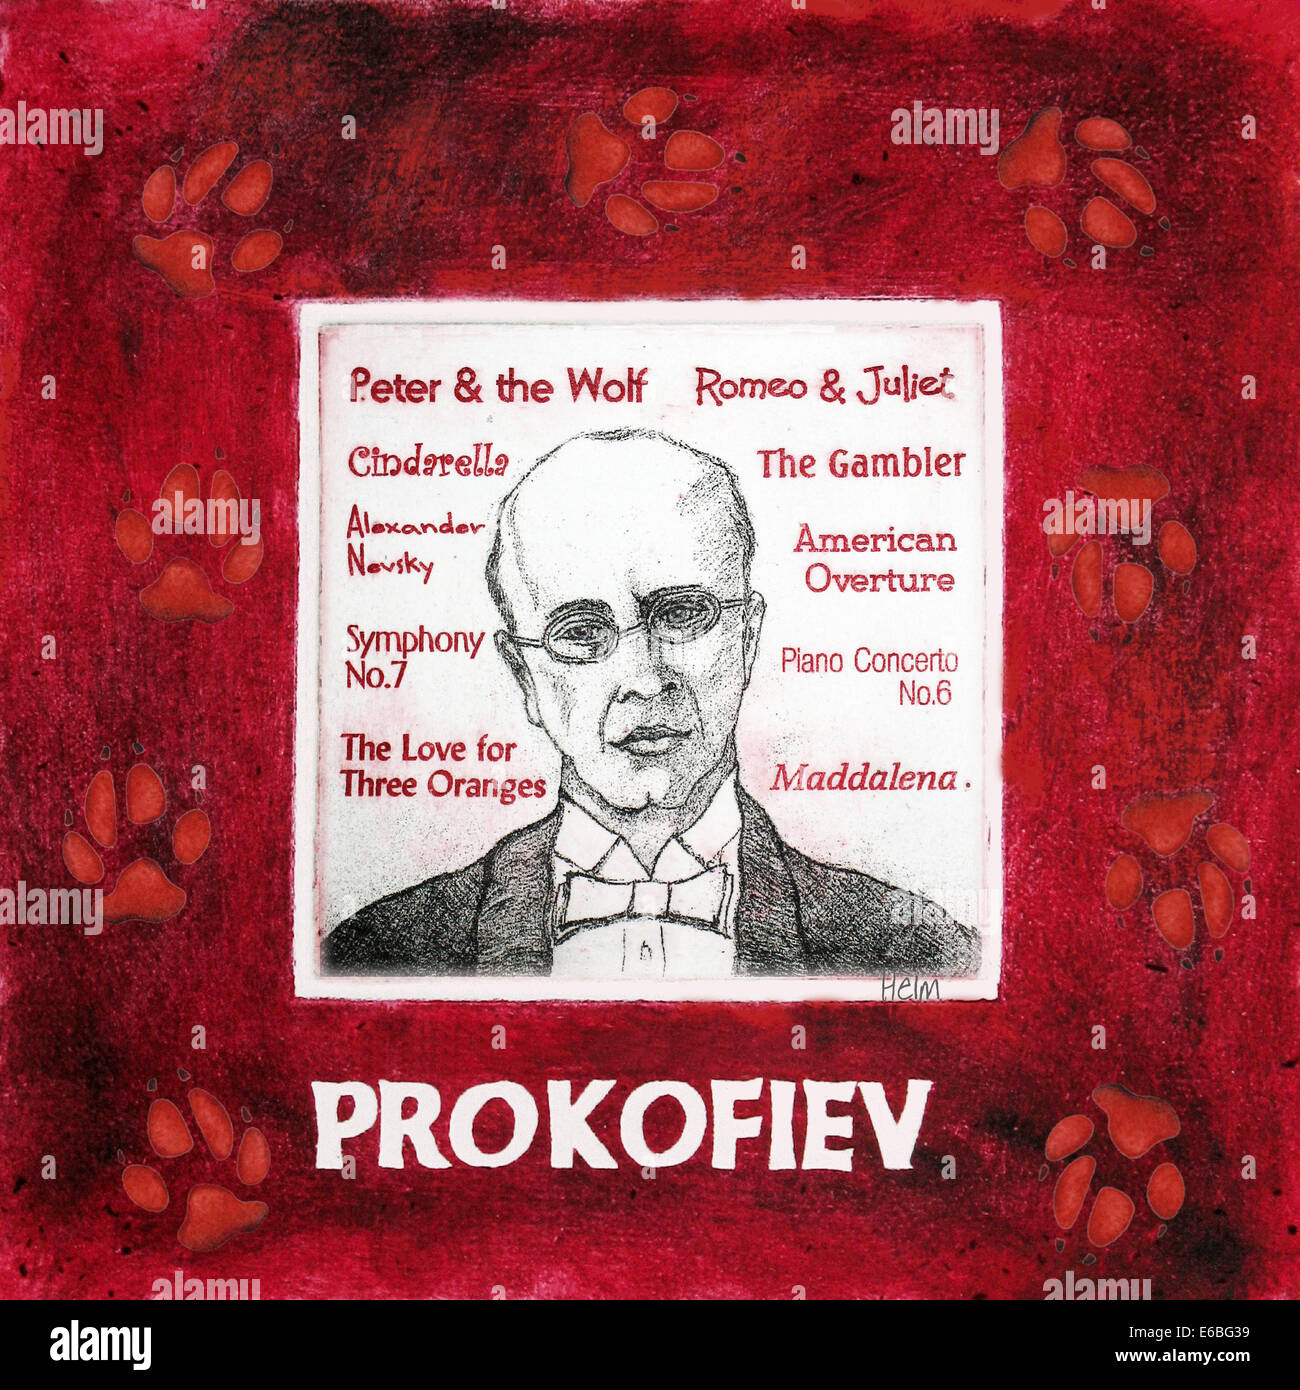 Prokofiev, Russian composer, 1891 - 1953 Stock Photo